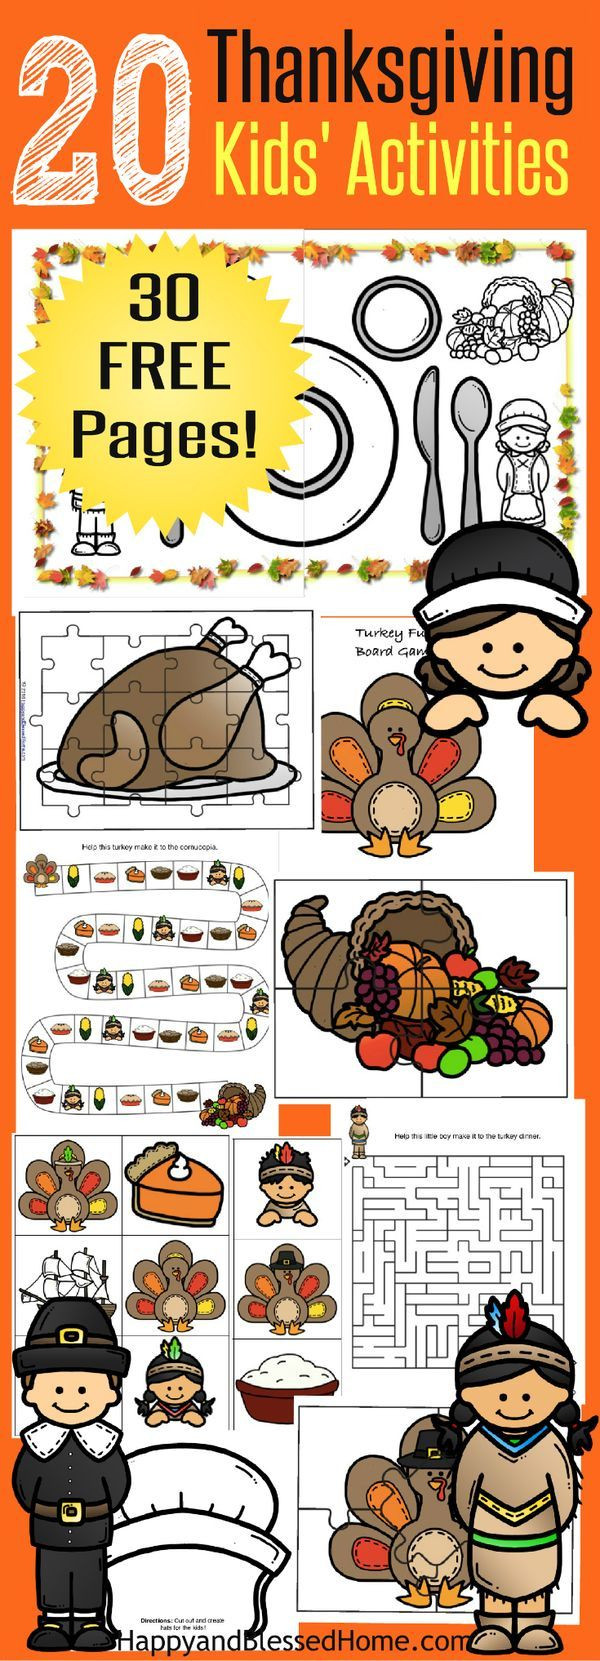 Thanksgiving Turkey Names
 500 best Thanksgiving Gratitude images on Pinterest